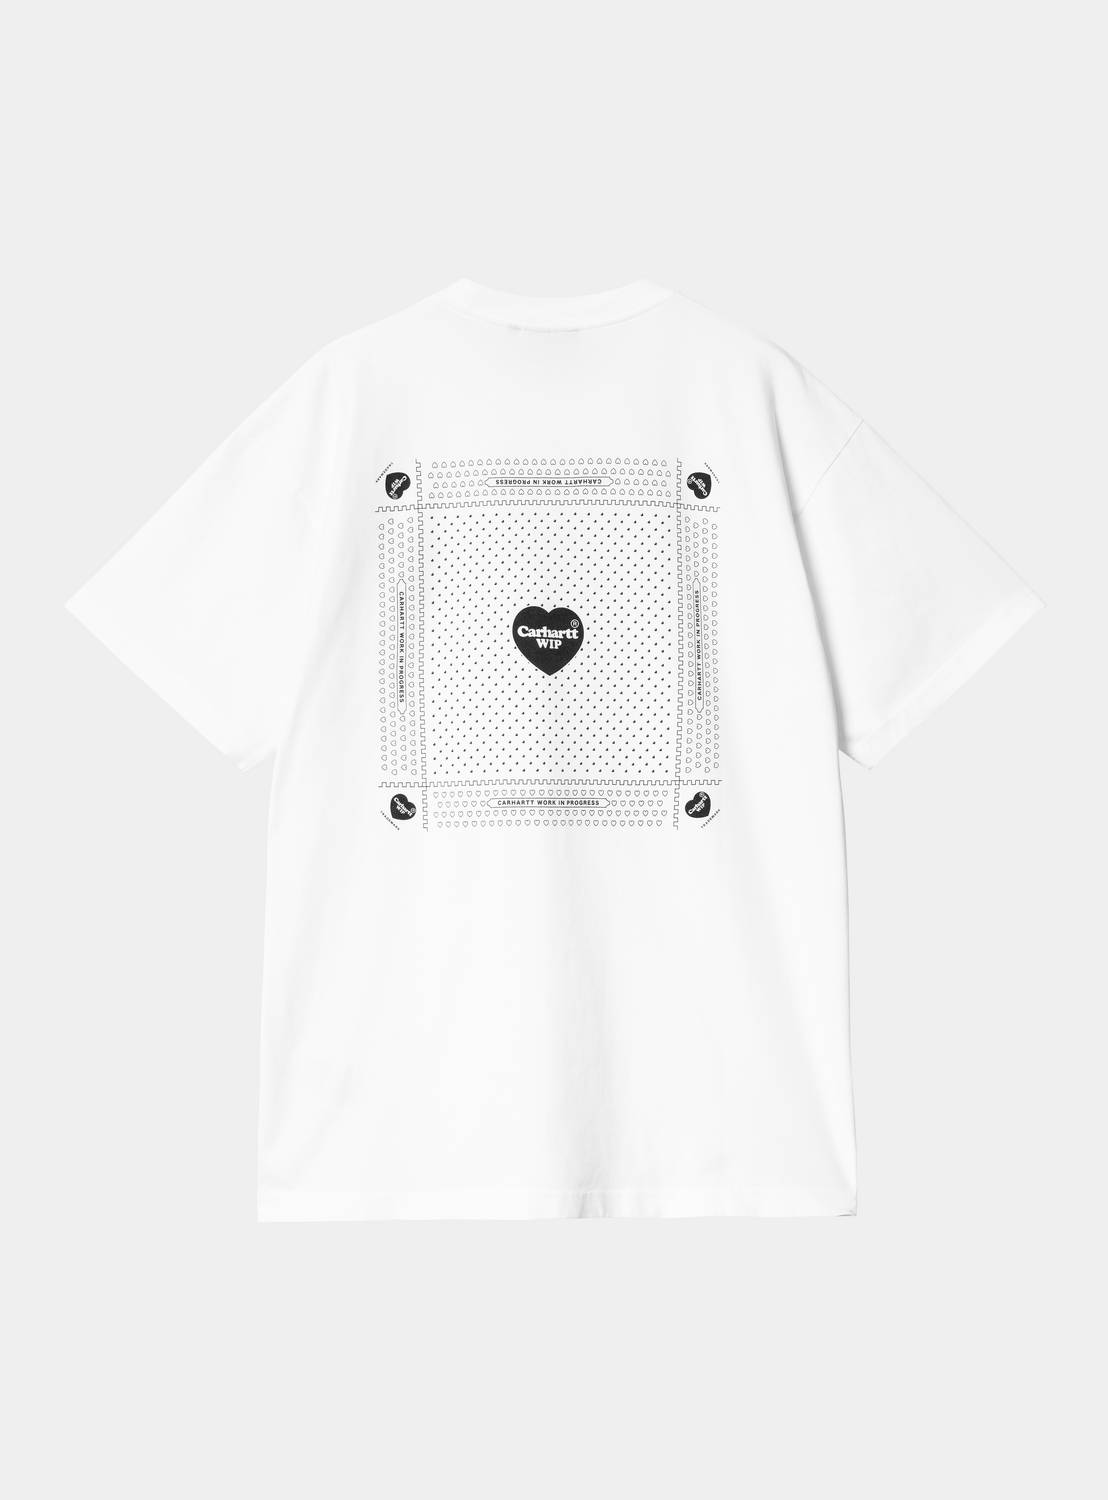 Carhartt WIP S/S Heart Bandana T-Shirt | Carhartt WIP